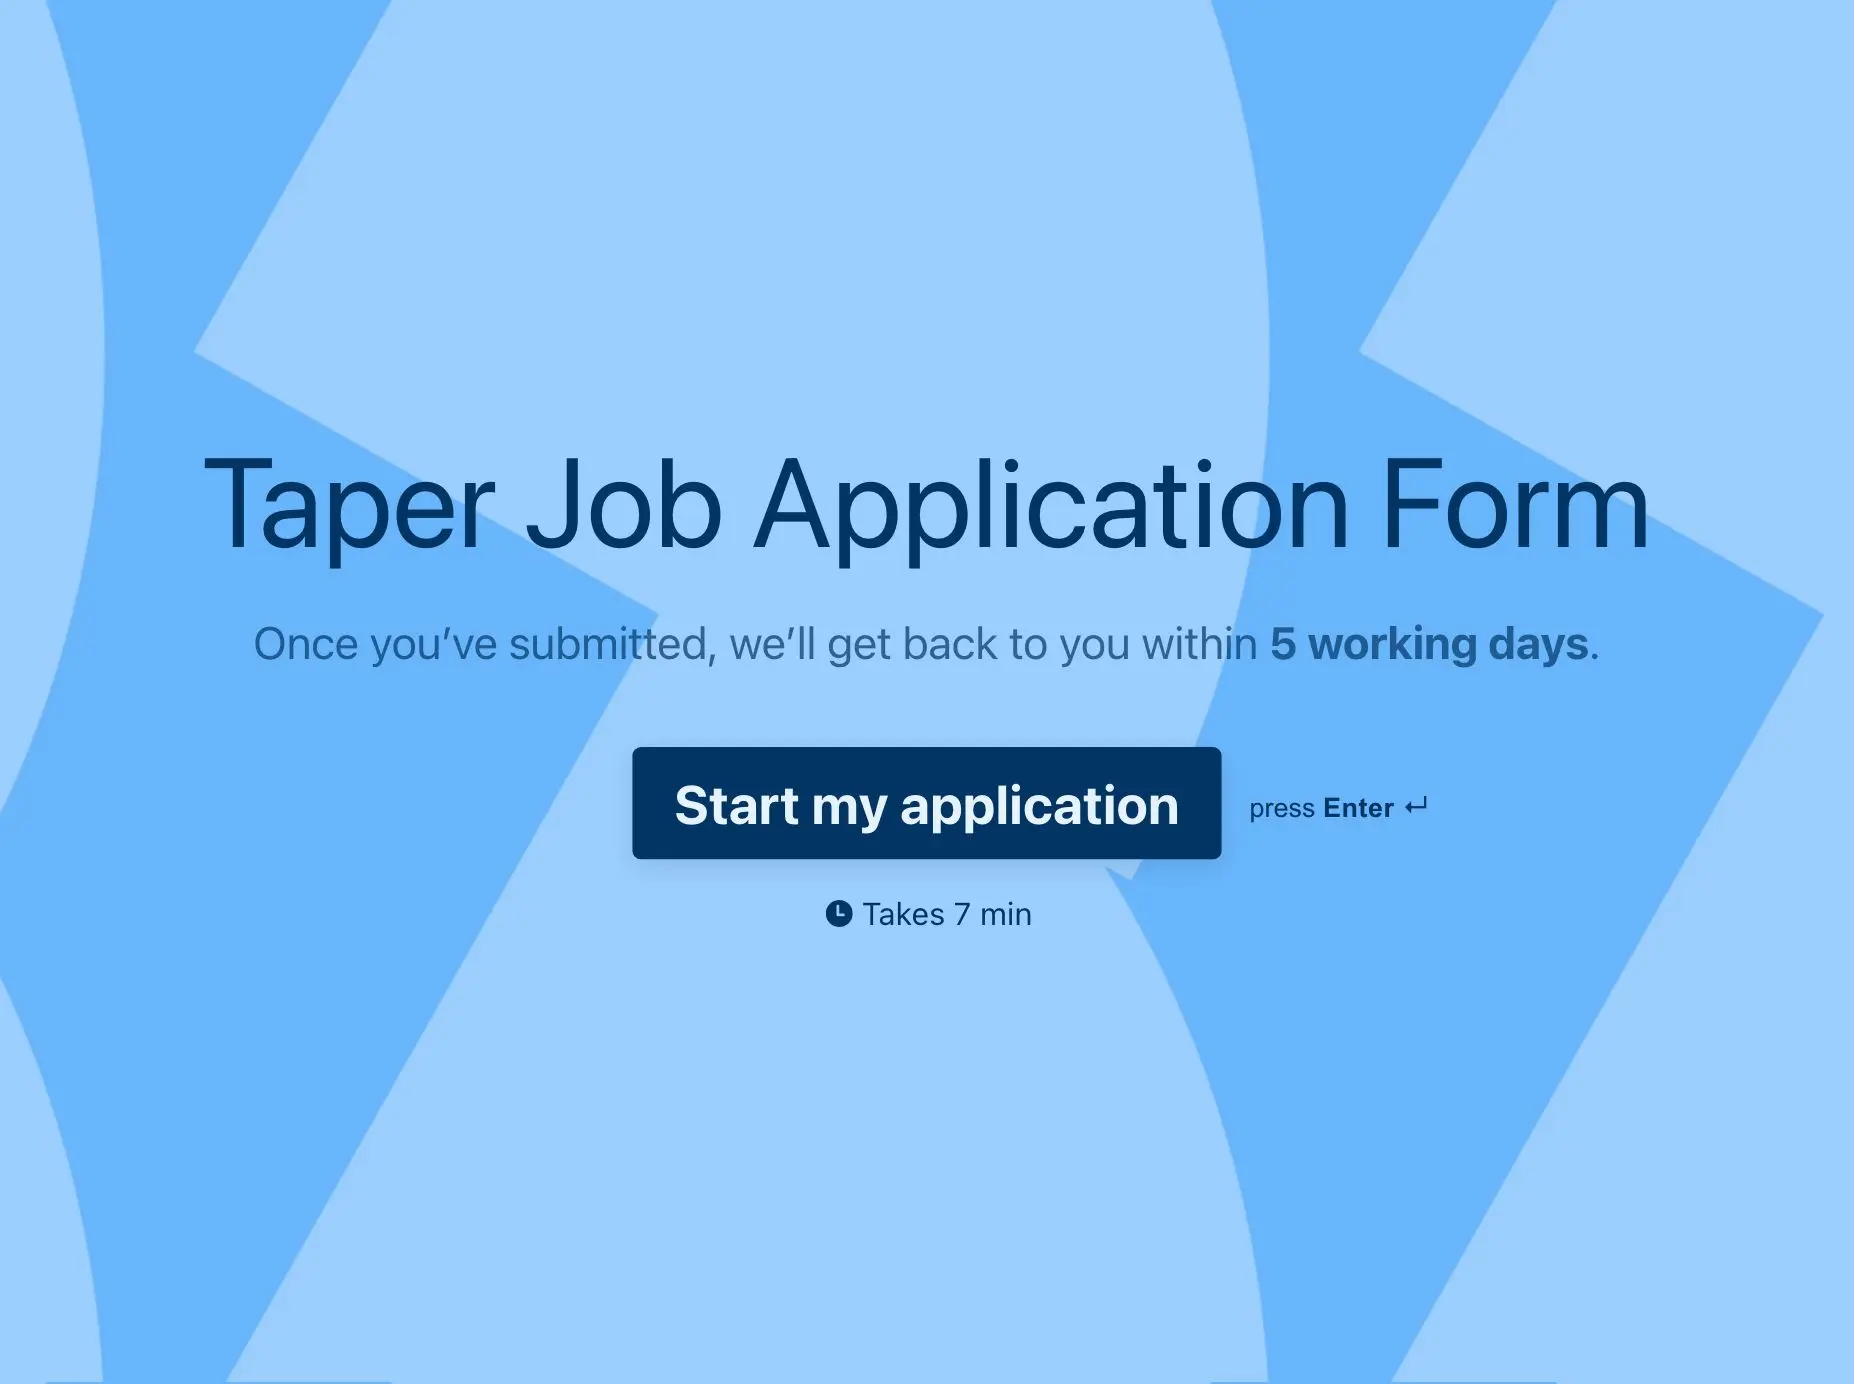 Taper Job Application Form Template Hero